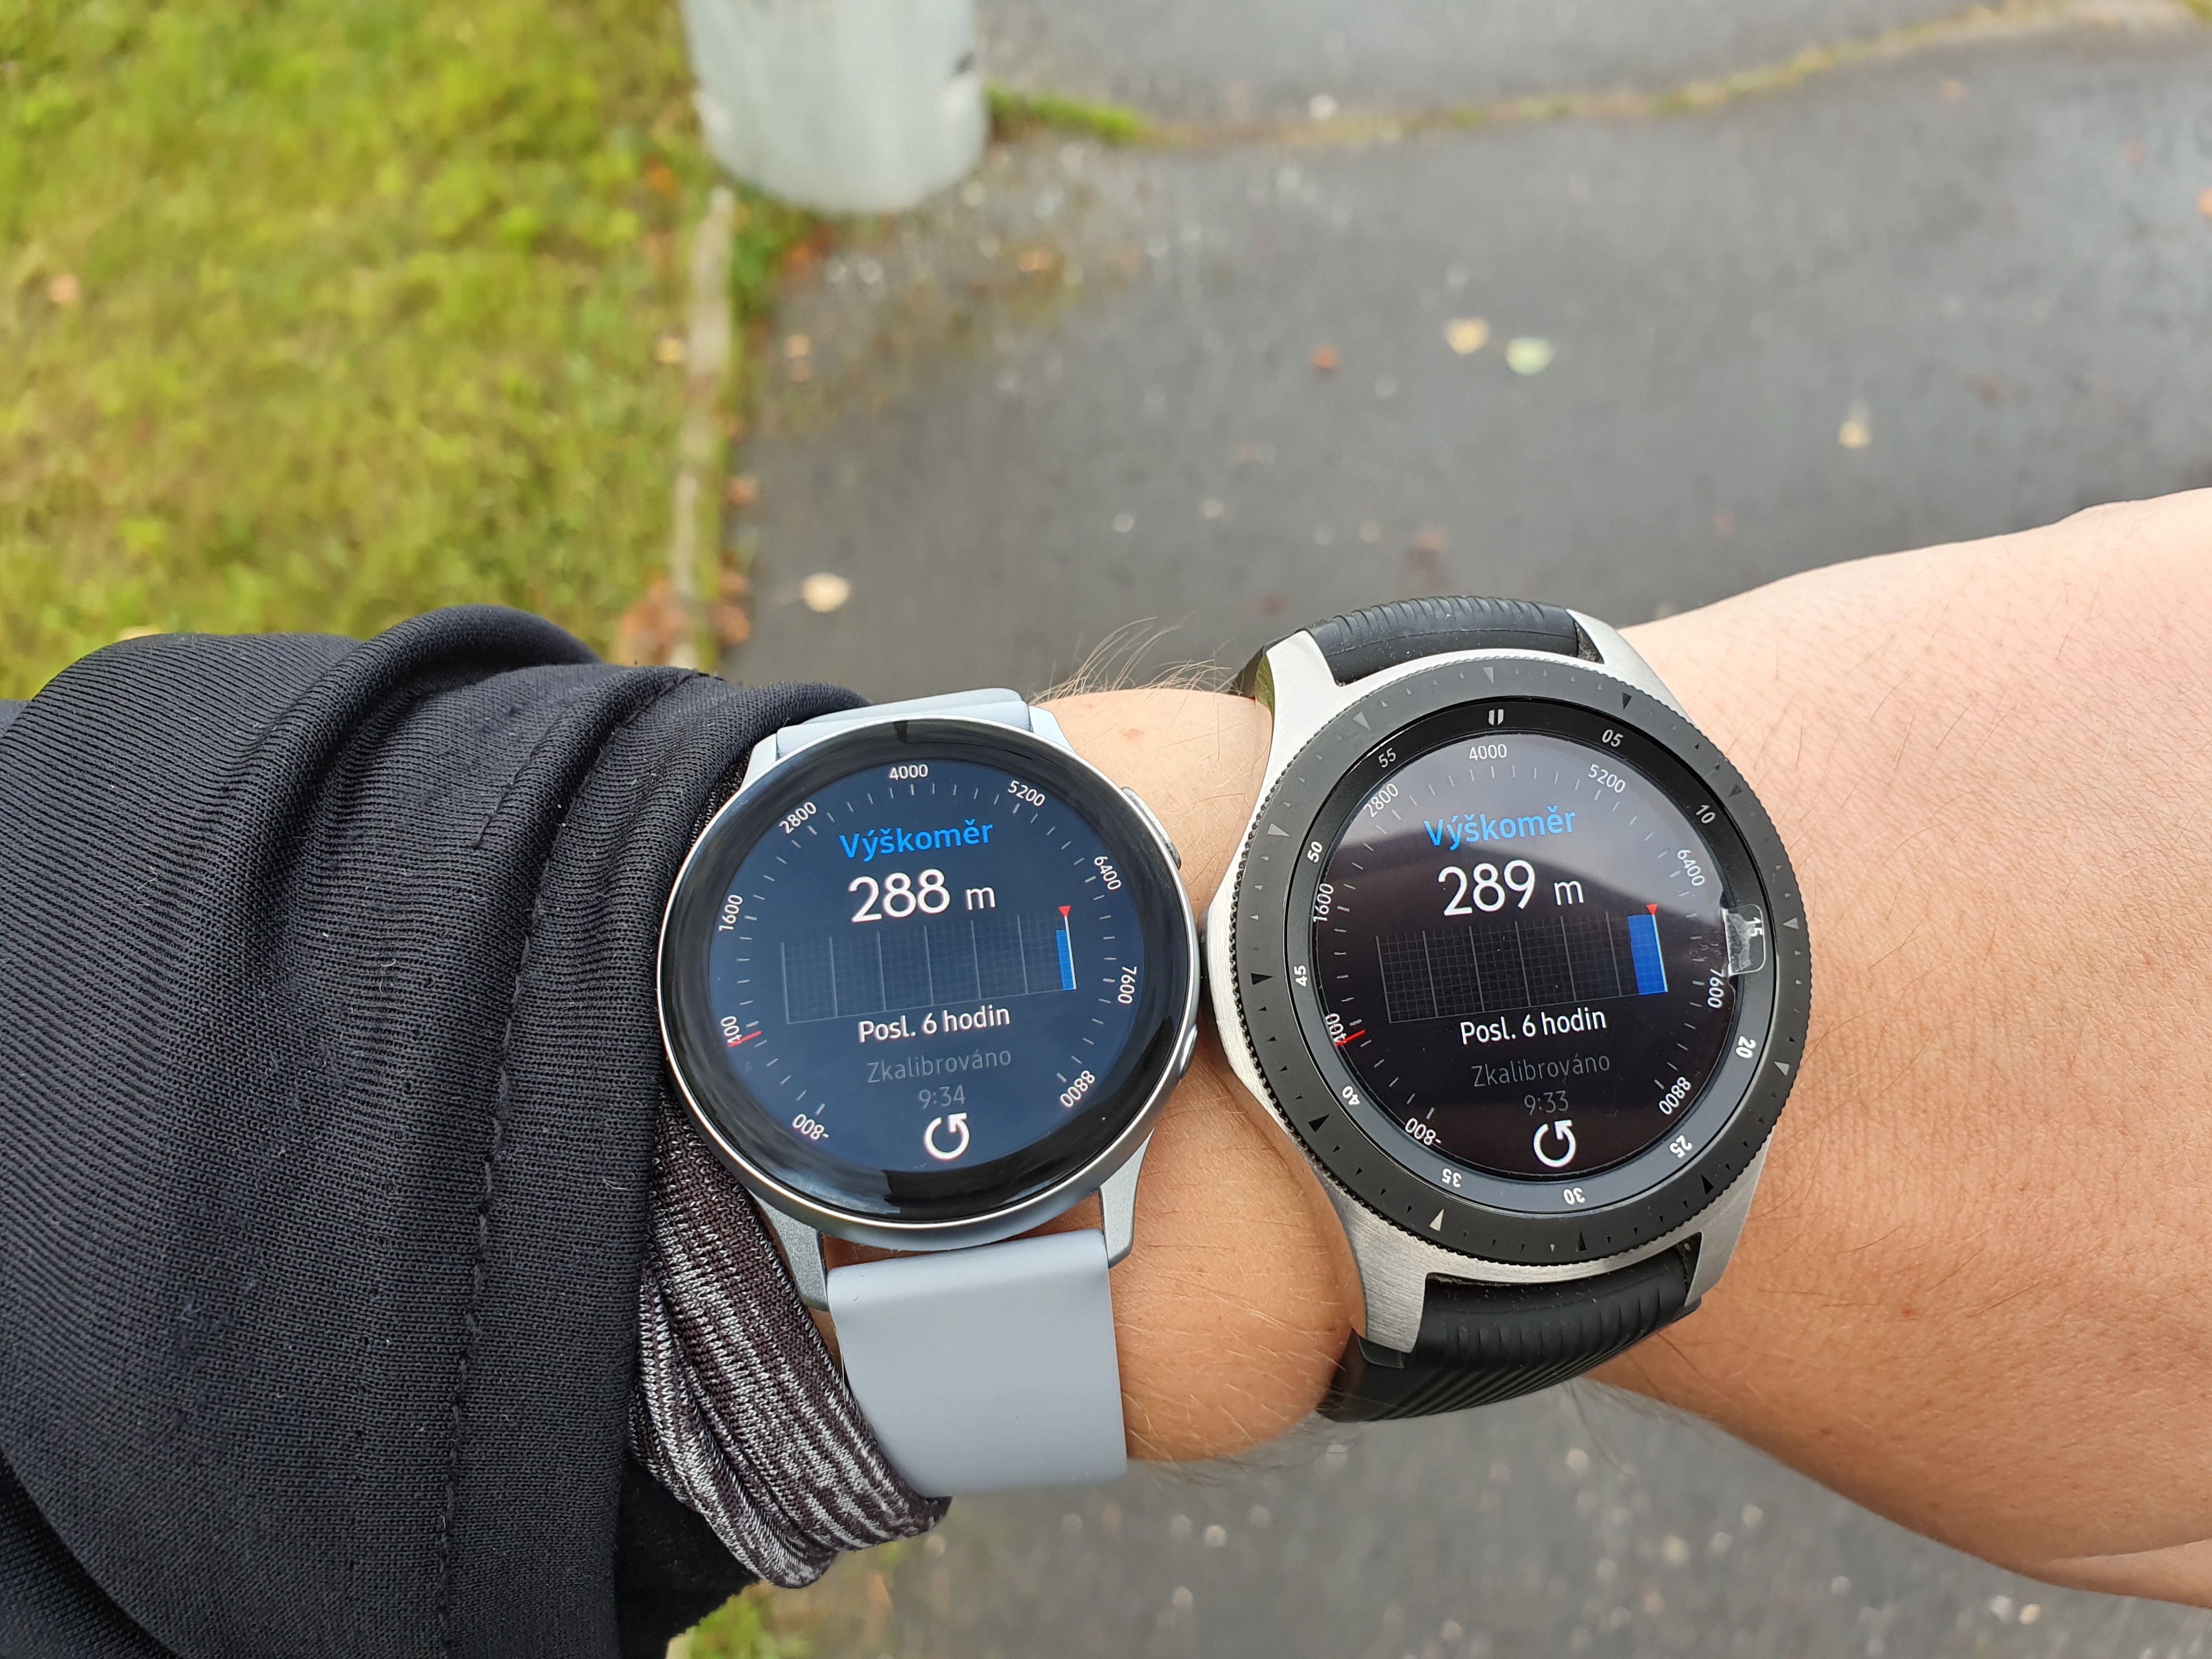 Vybíráme hodinky na sport - Galaxy Watch 46mm vs. Galaxy Watch Active 2 -  Stránka 3 - Samsung Community